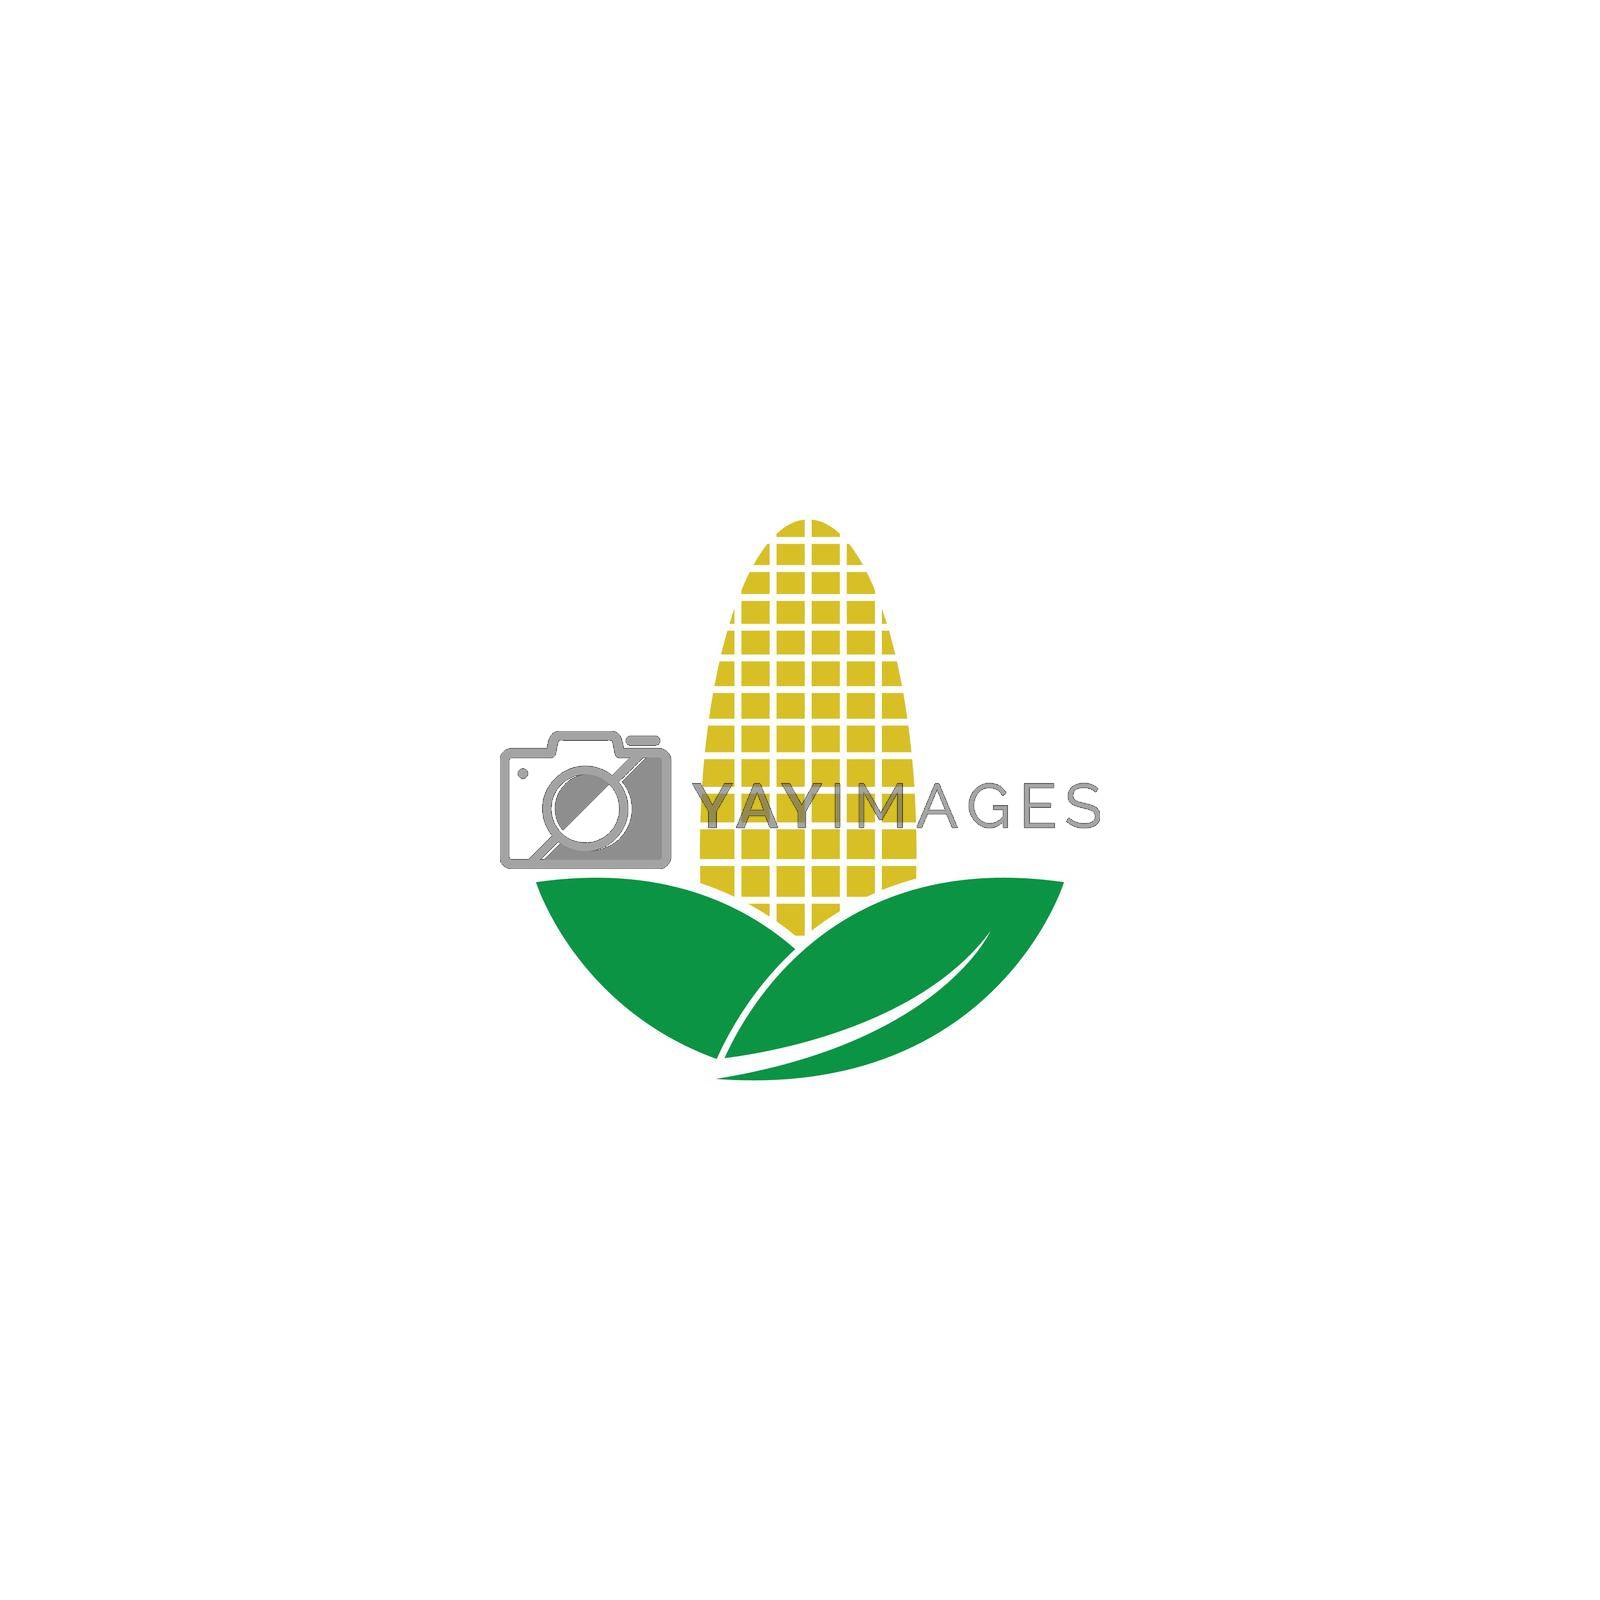 Royalty free image of Sweet corn icon logo design by bellaxbudhong3